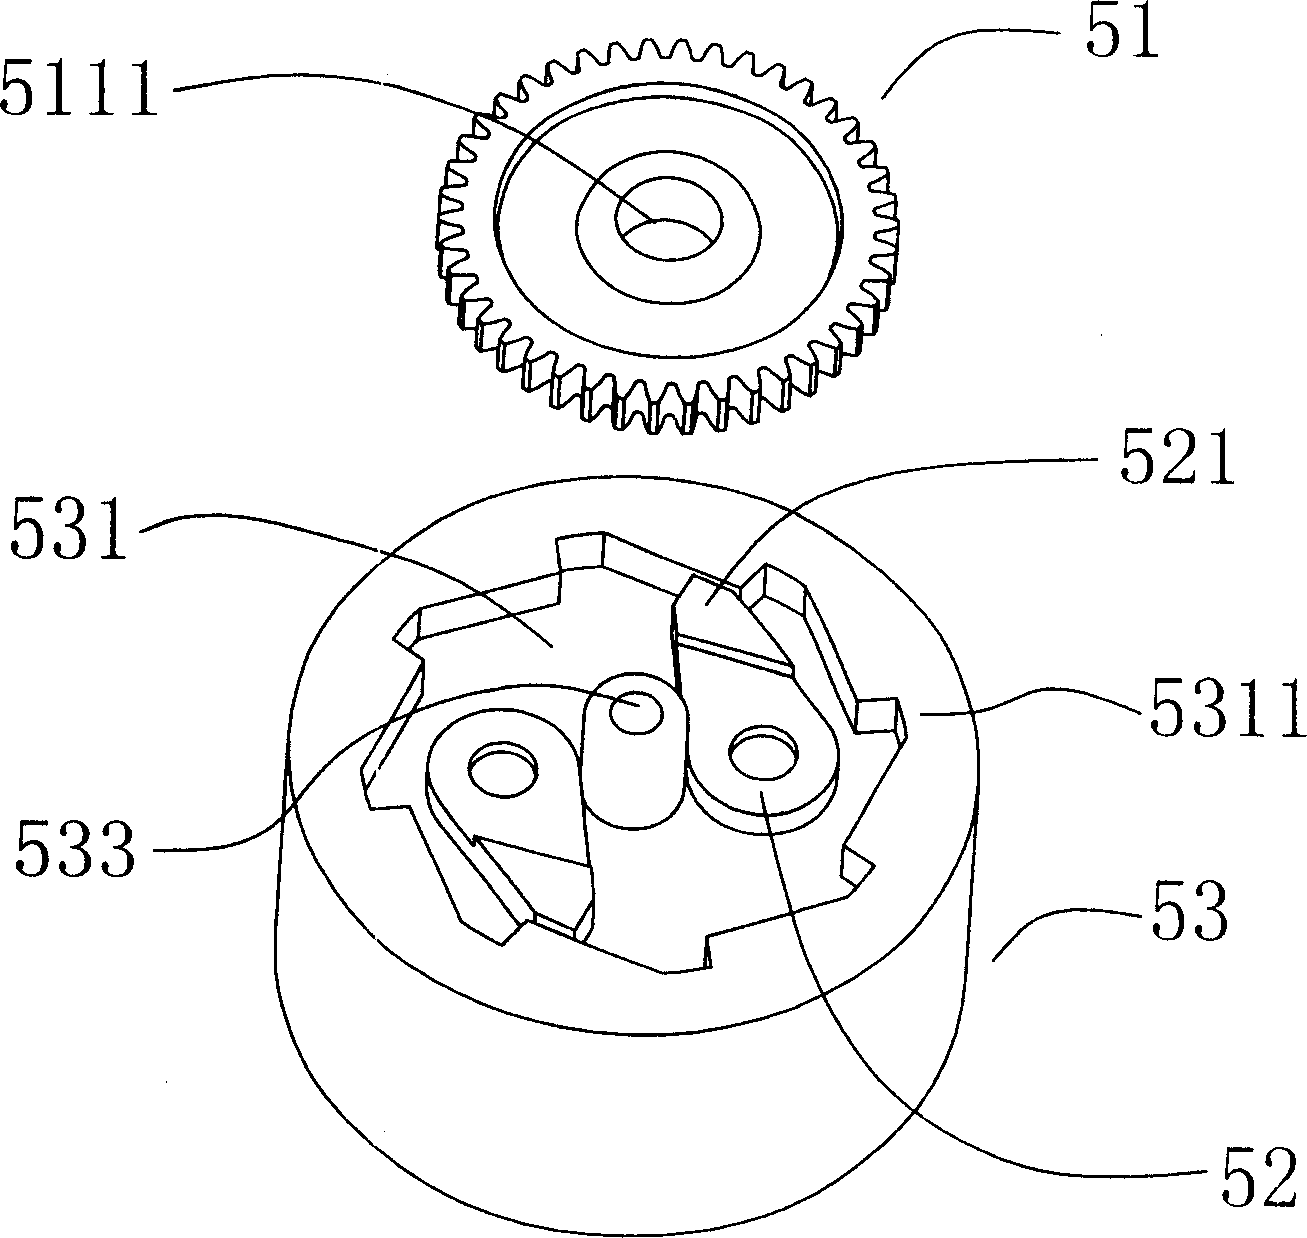 Electronic lock with flywheel self-powering apparatus